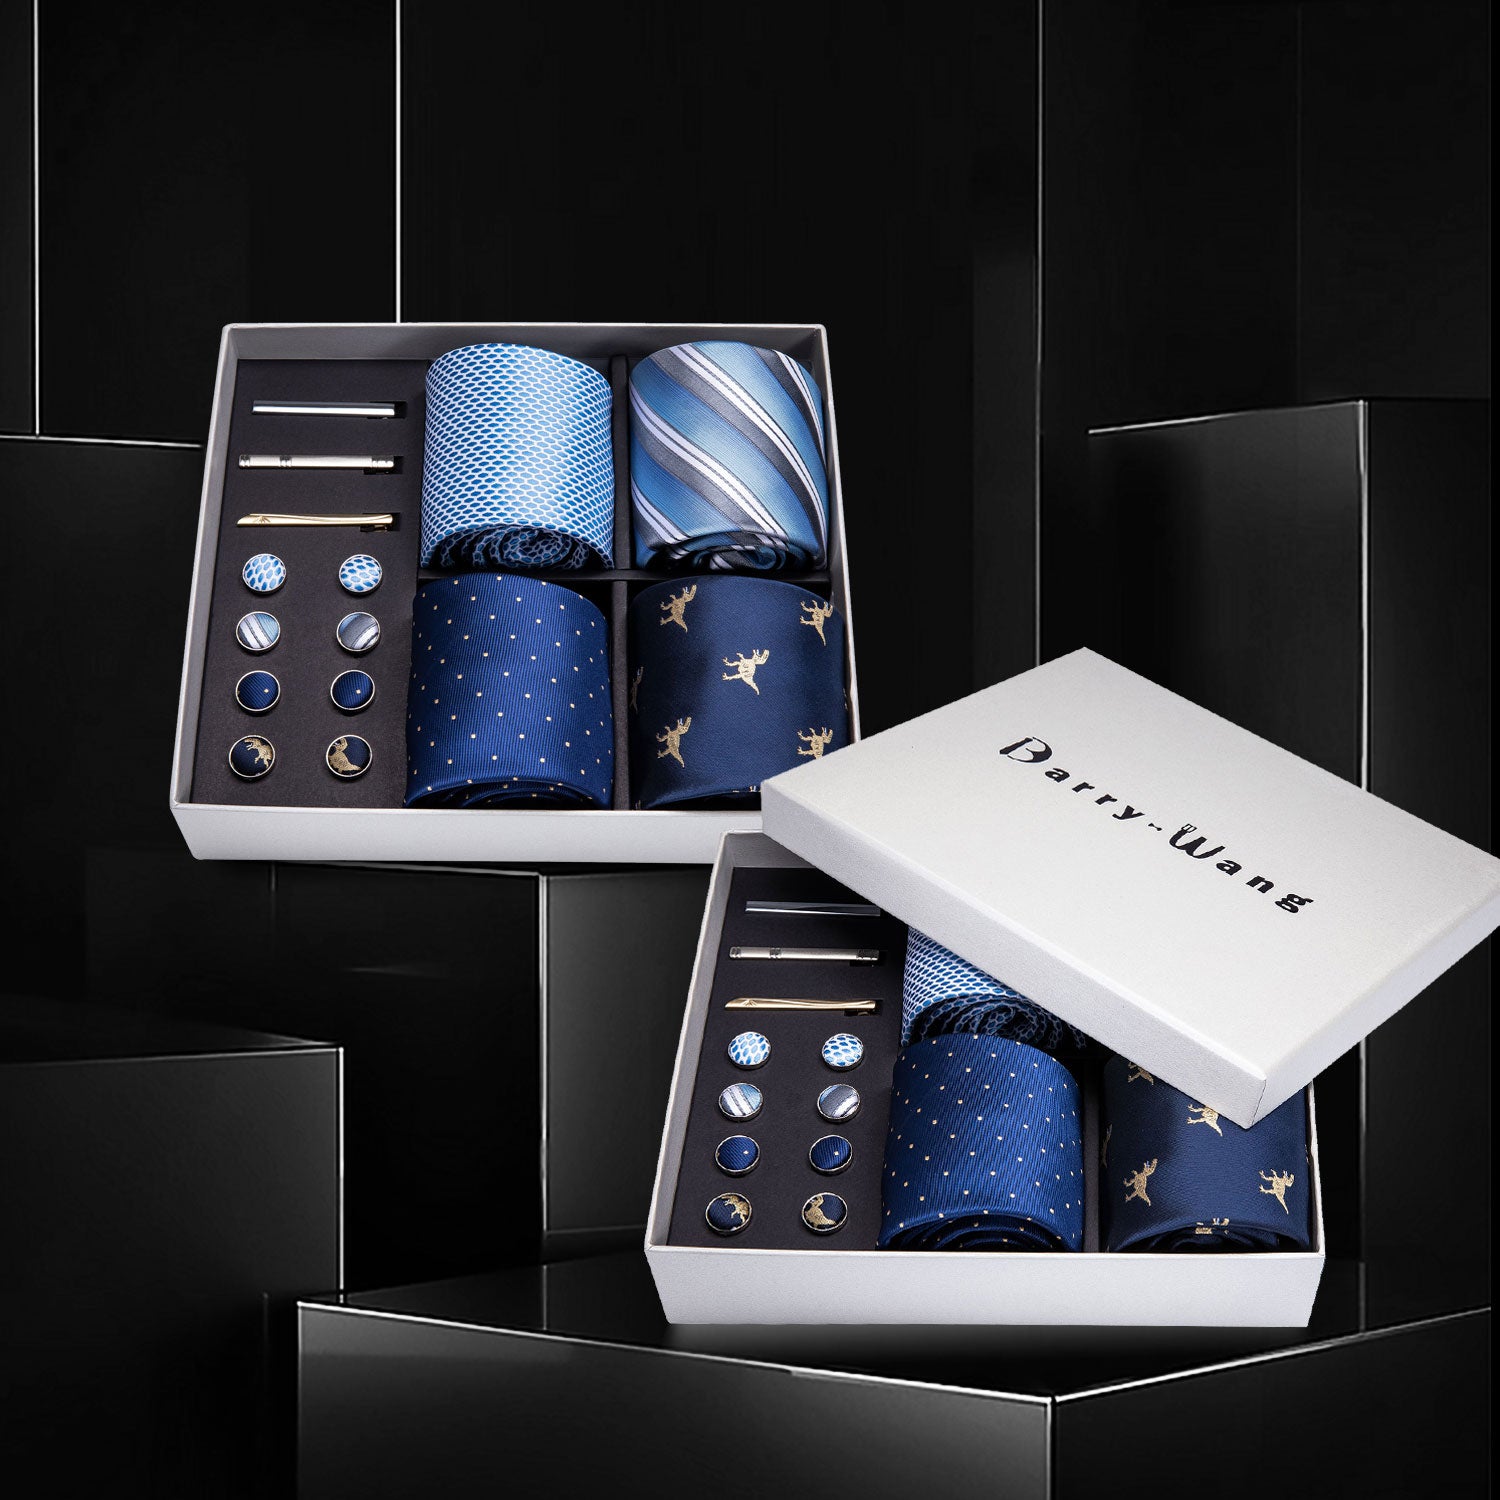 NINIRUSI - Gift Box for Neck Tie